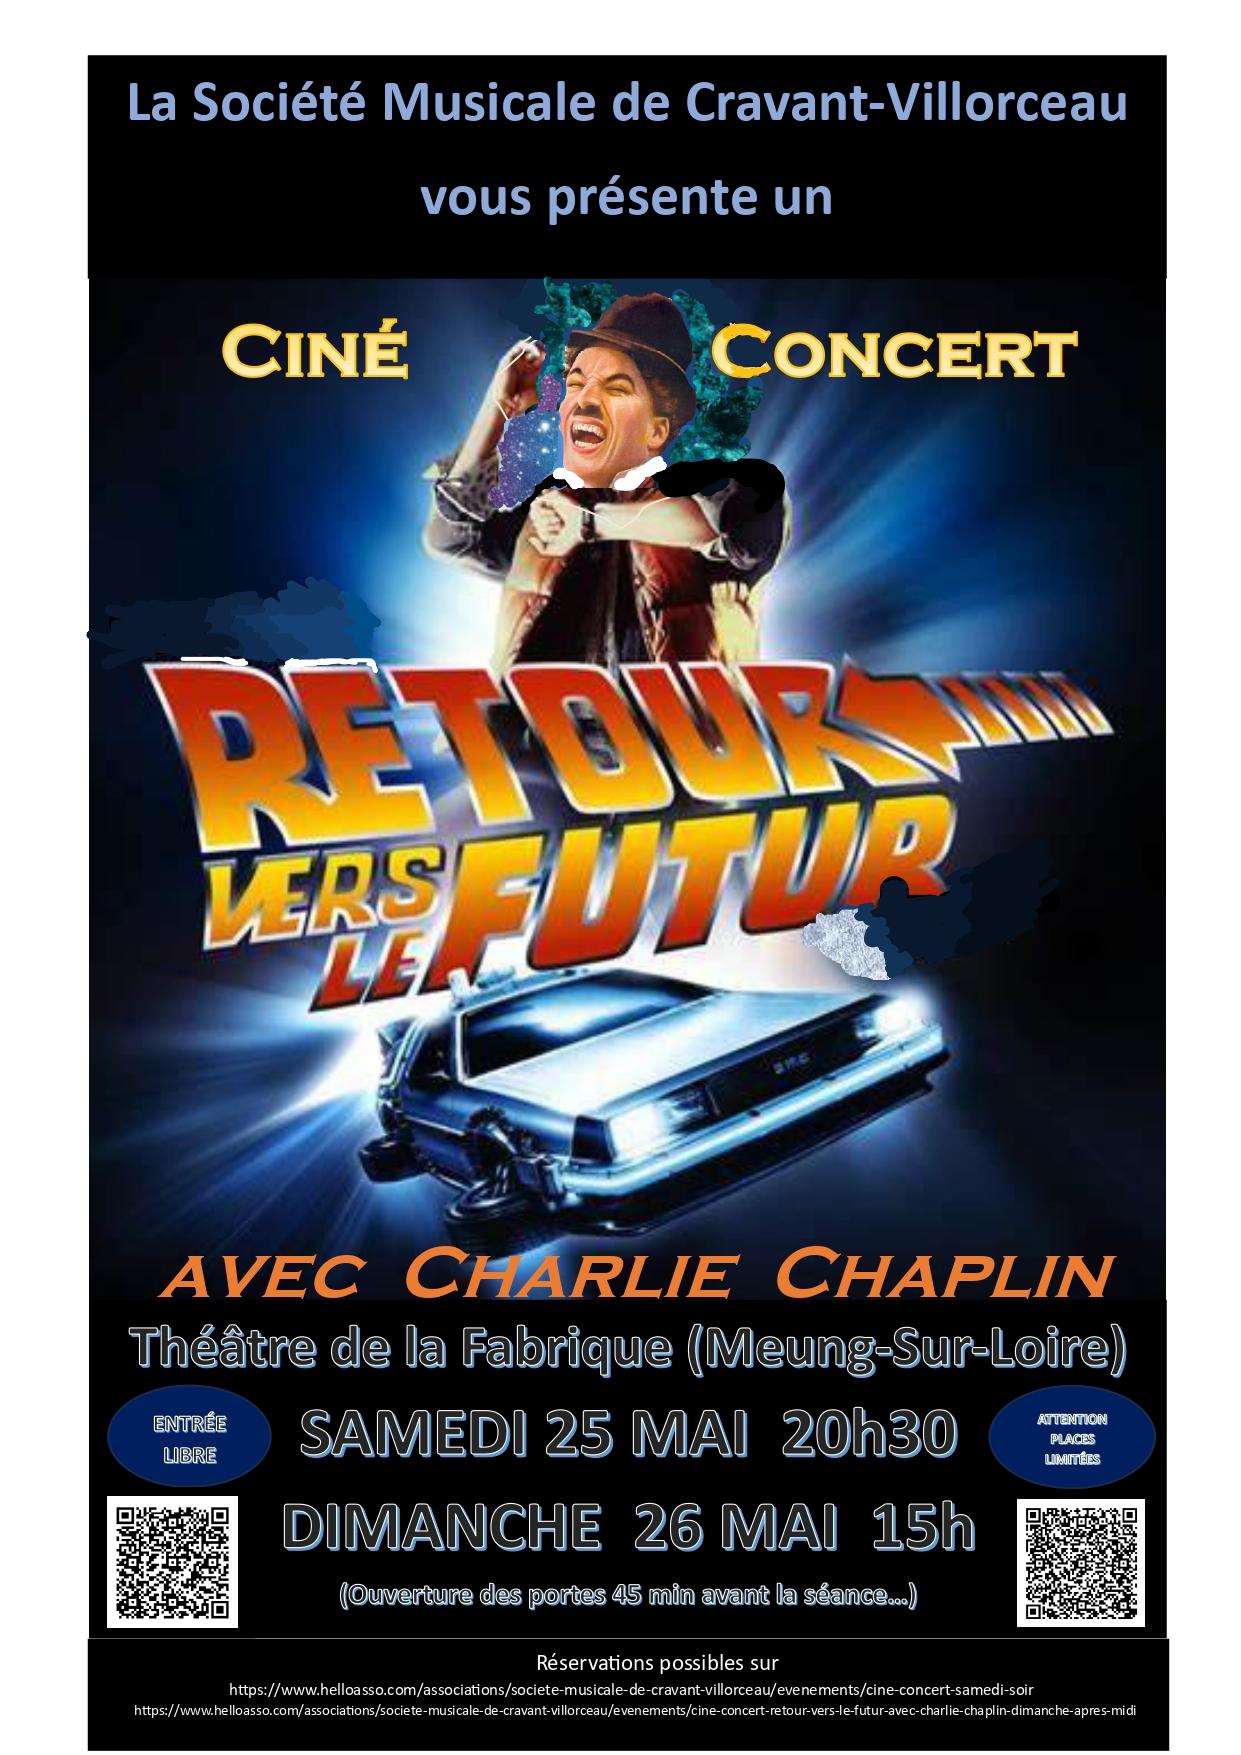 Affiche cine concert charlie chaplin 6 page 0001